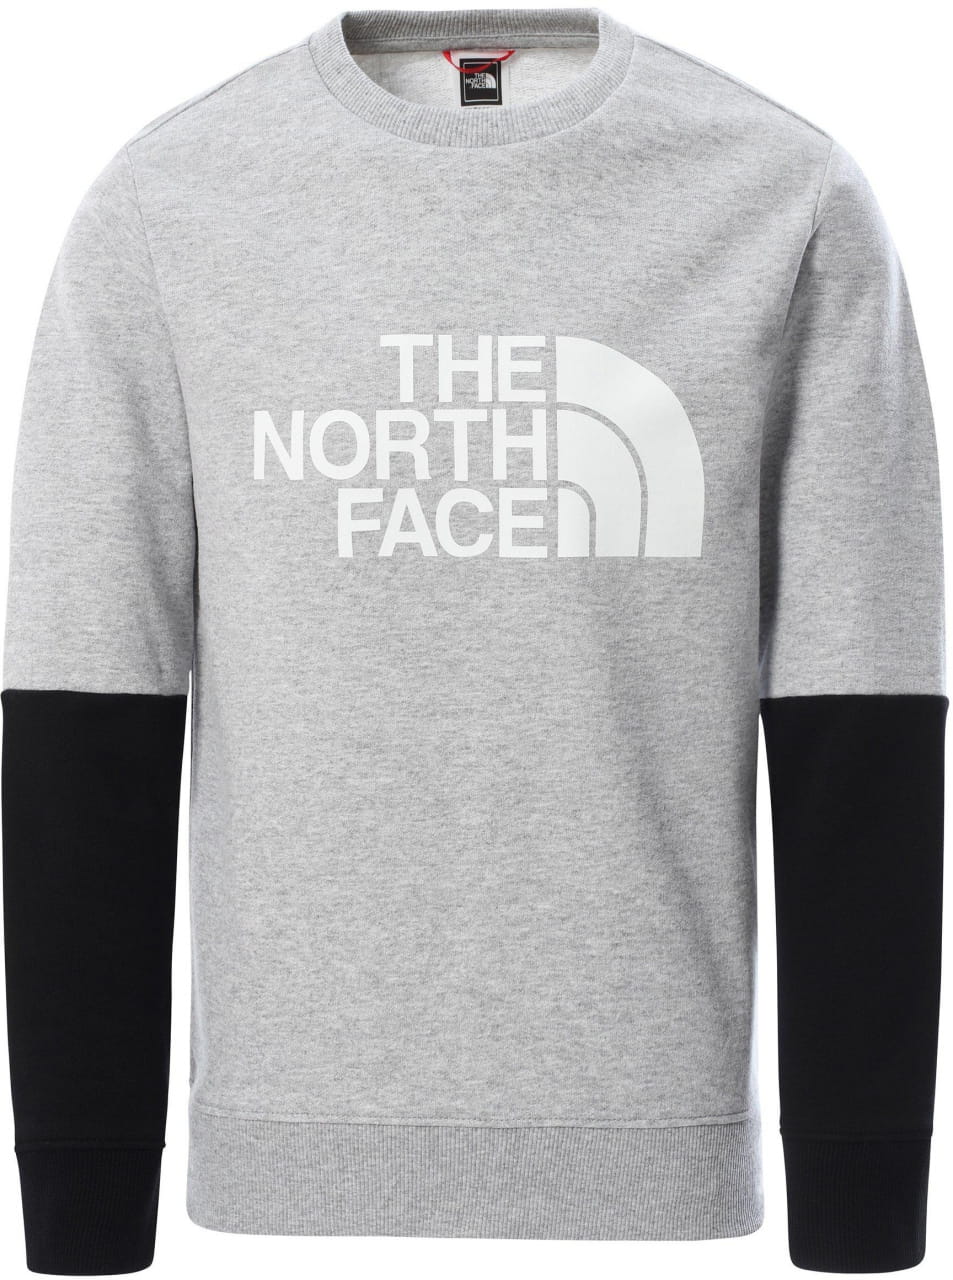 Sweatshirts The North Face Youth Drew Peak Light Crew